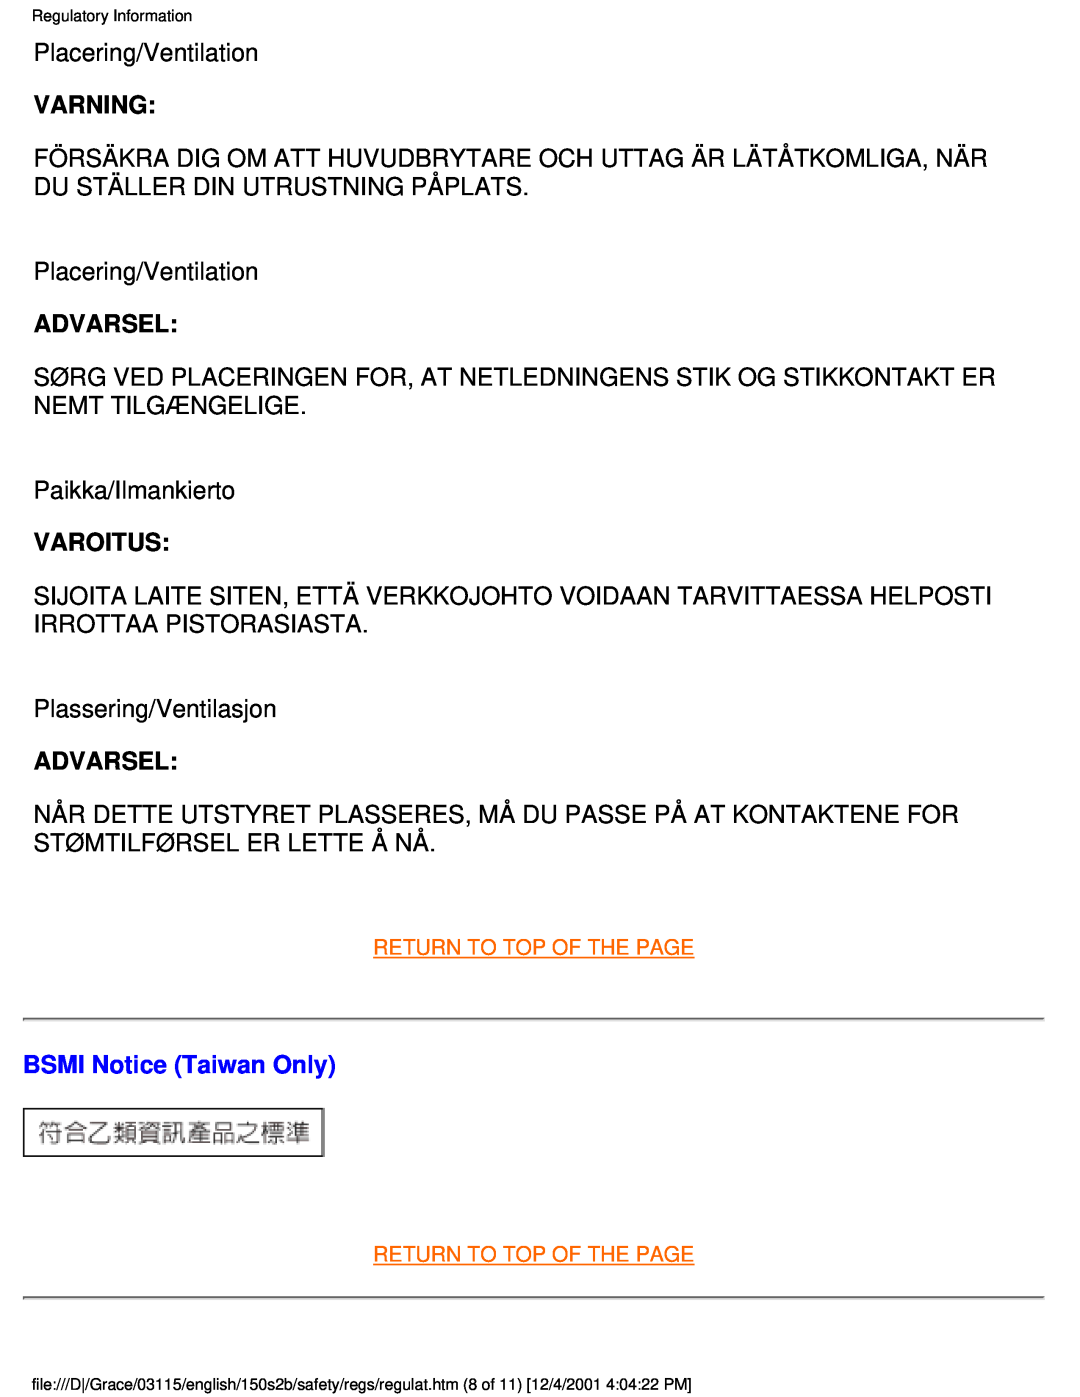 Philips 150S2B user manual Varning, Advarsel, Varoitus, BSMI Notice Taiwan Only 